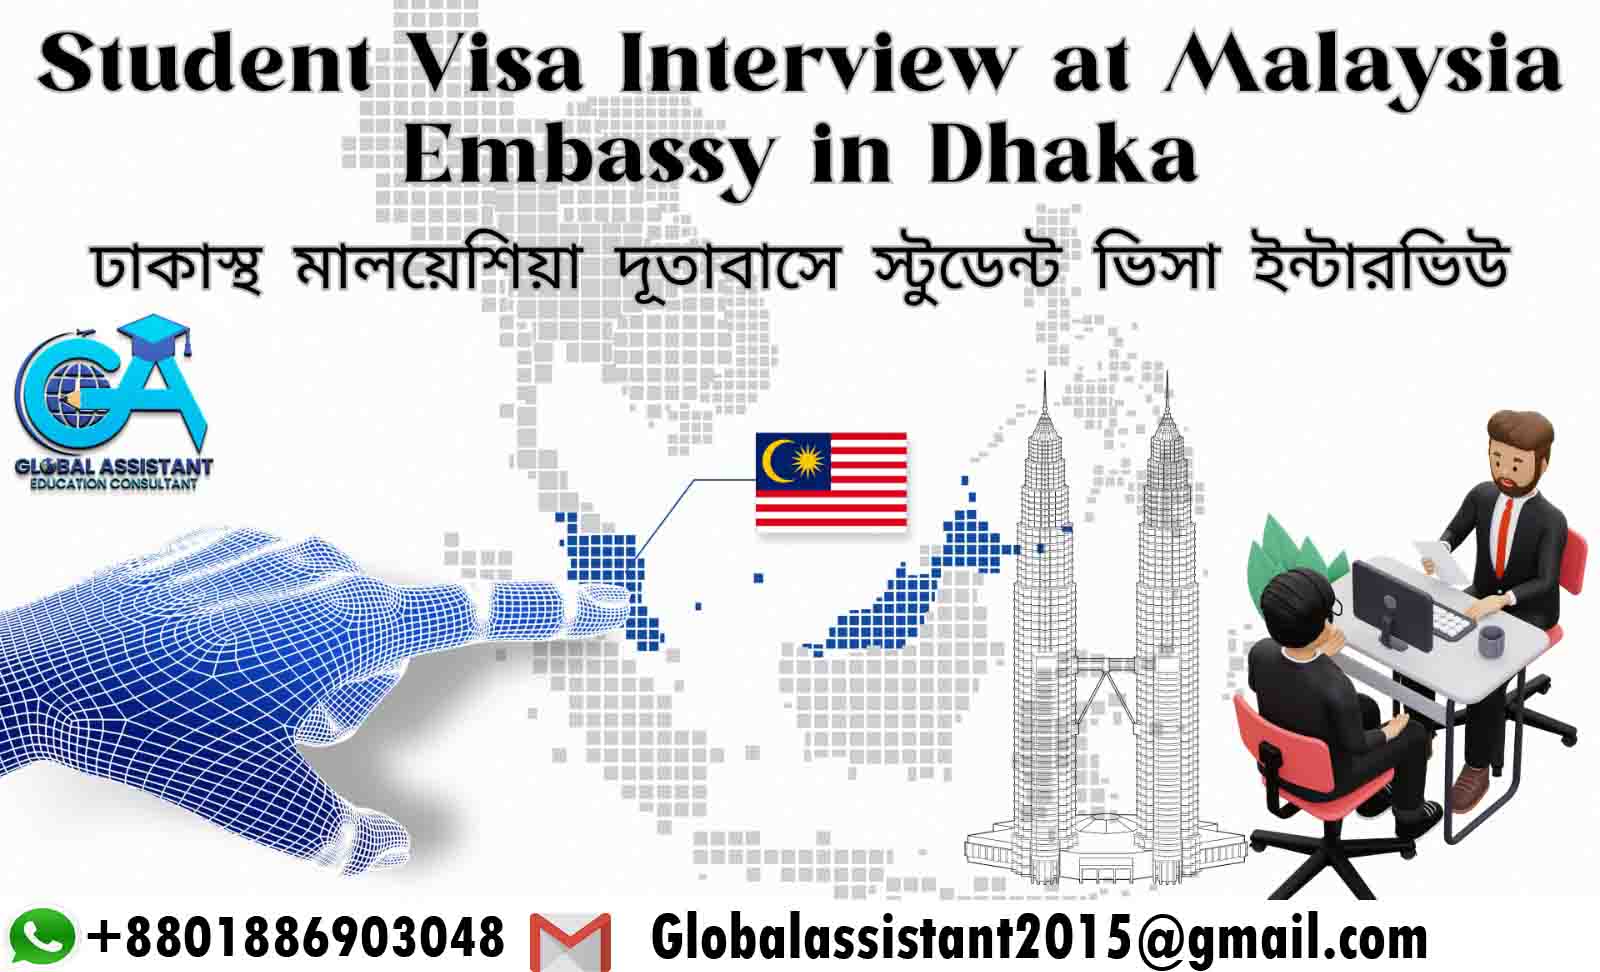 Malaysia Student Visa Interview - মালয়েশিয়া স্টুডেন্ট ভিসার ইন্টার্ভিউ